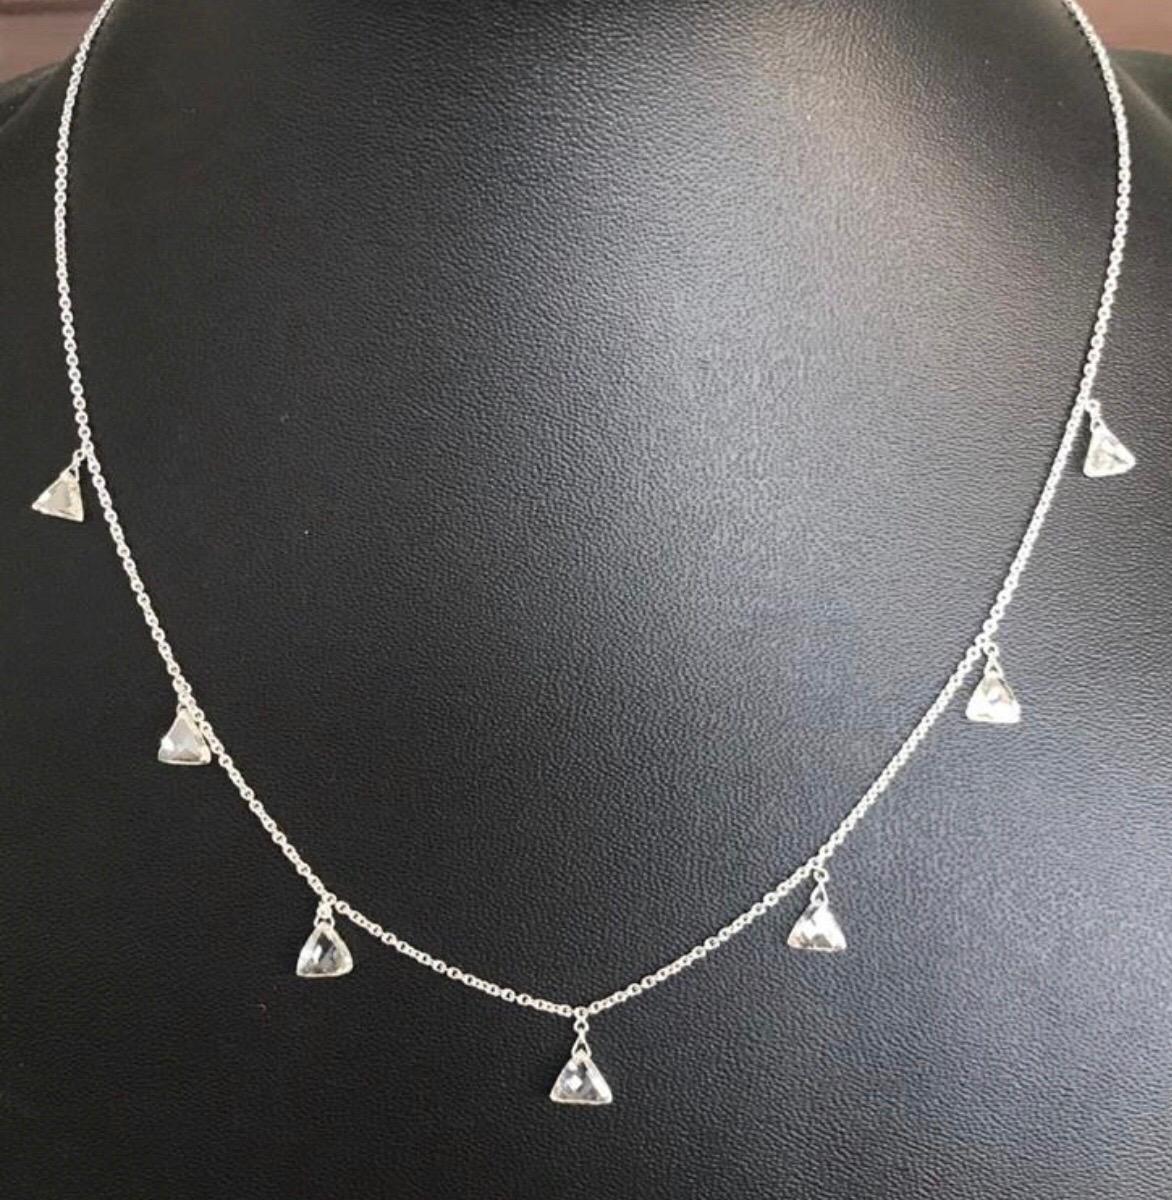 PANIM 18 Karat Diamond Taviz Choker Necklace in 18K White Gold In New Condition For Sale In Tsim Sha Tsui, Hong Kong